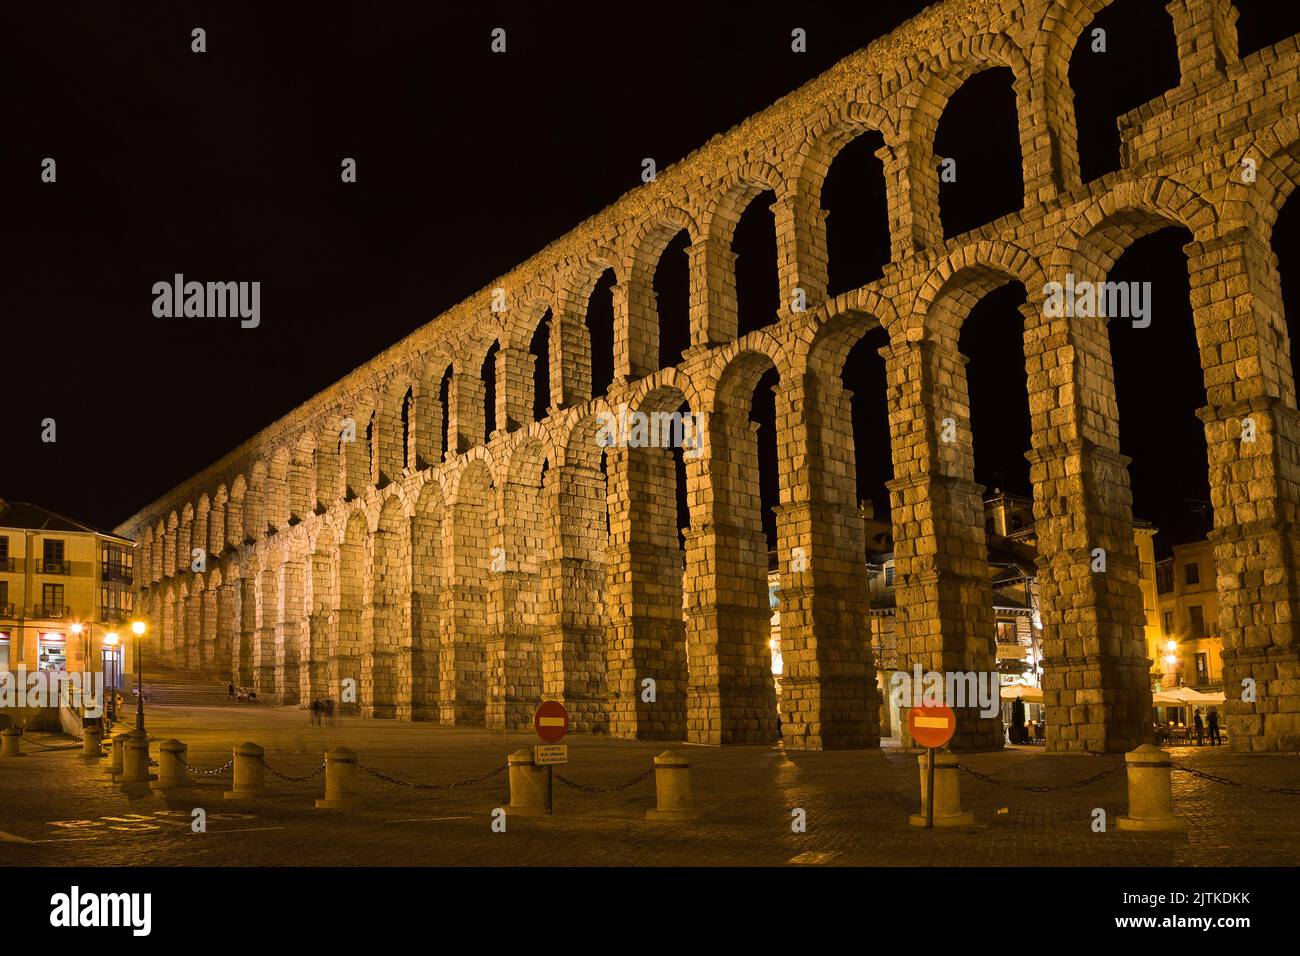 Segovia, Spain - August 21, 2020: Aqueduct of Segovia from Plaza Artilleria at night, Segovia, Spain. Stock Photo